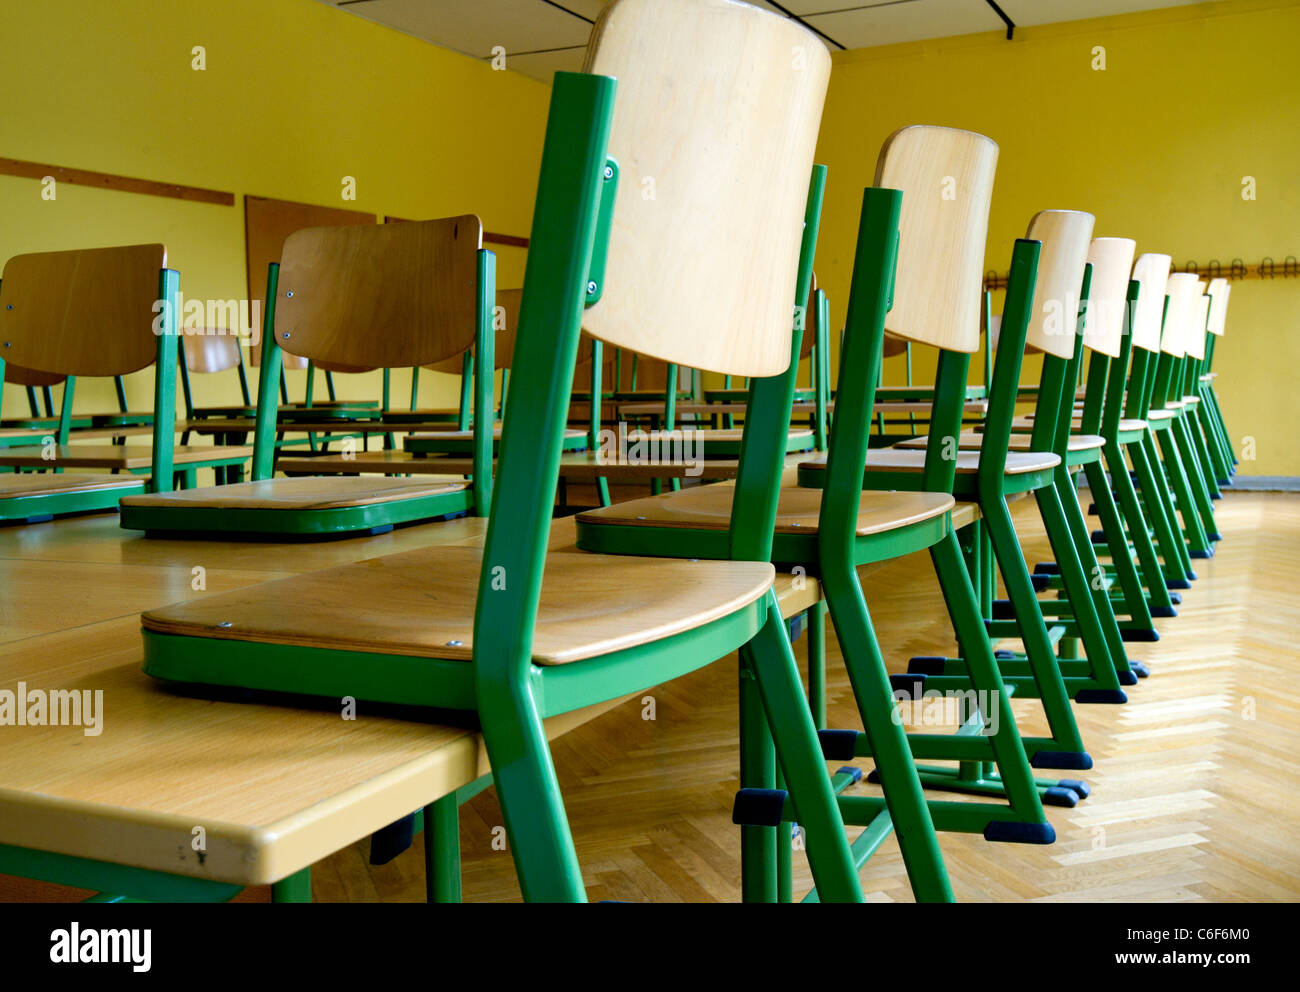 Klassenzimmer ohne Schüler; classroom without students Stock Photo